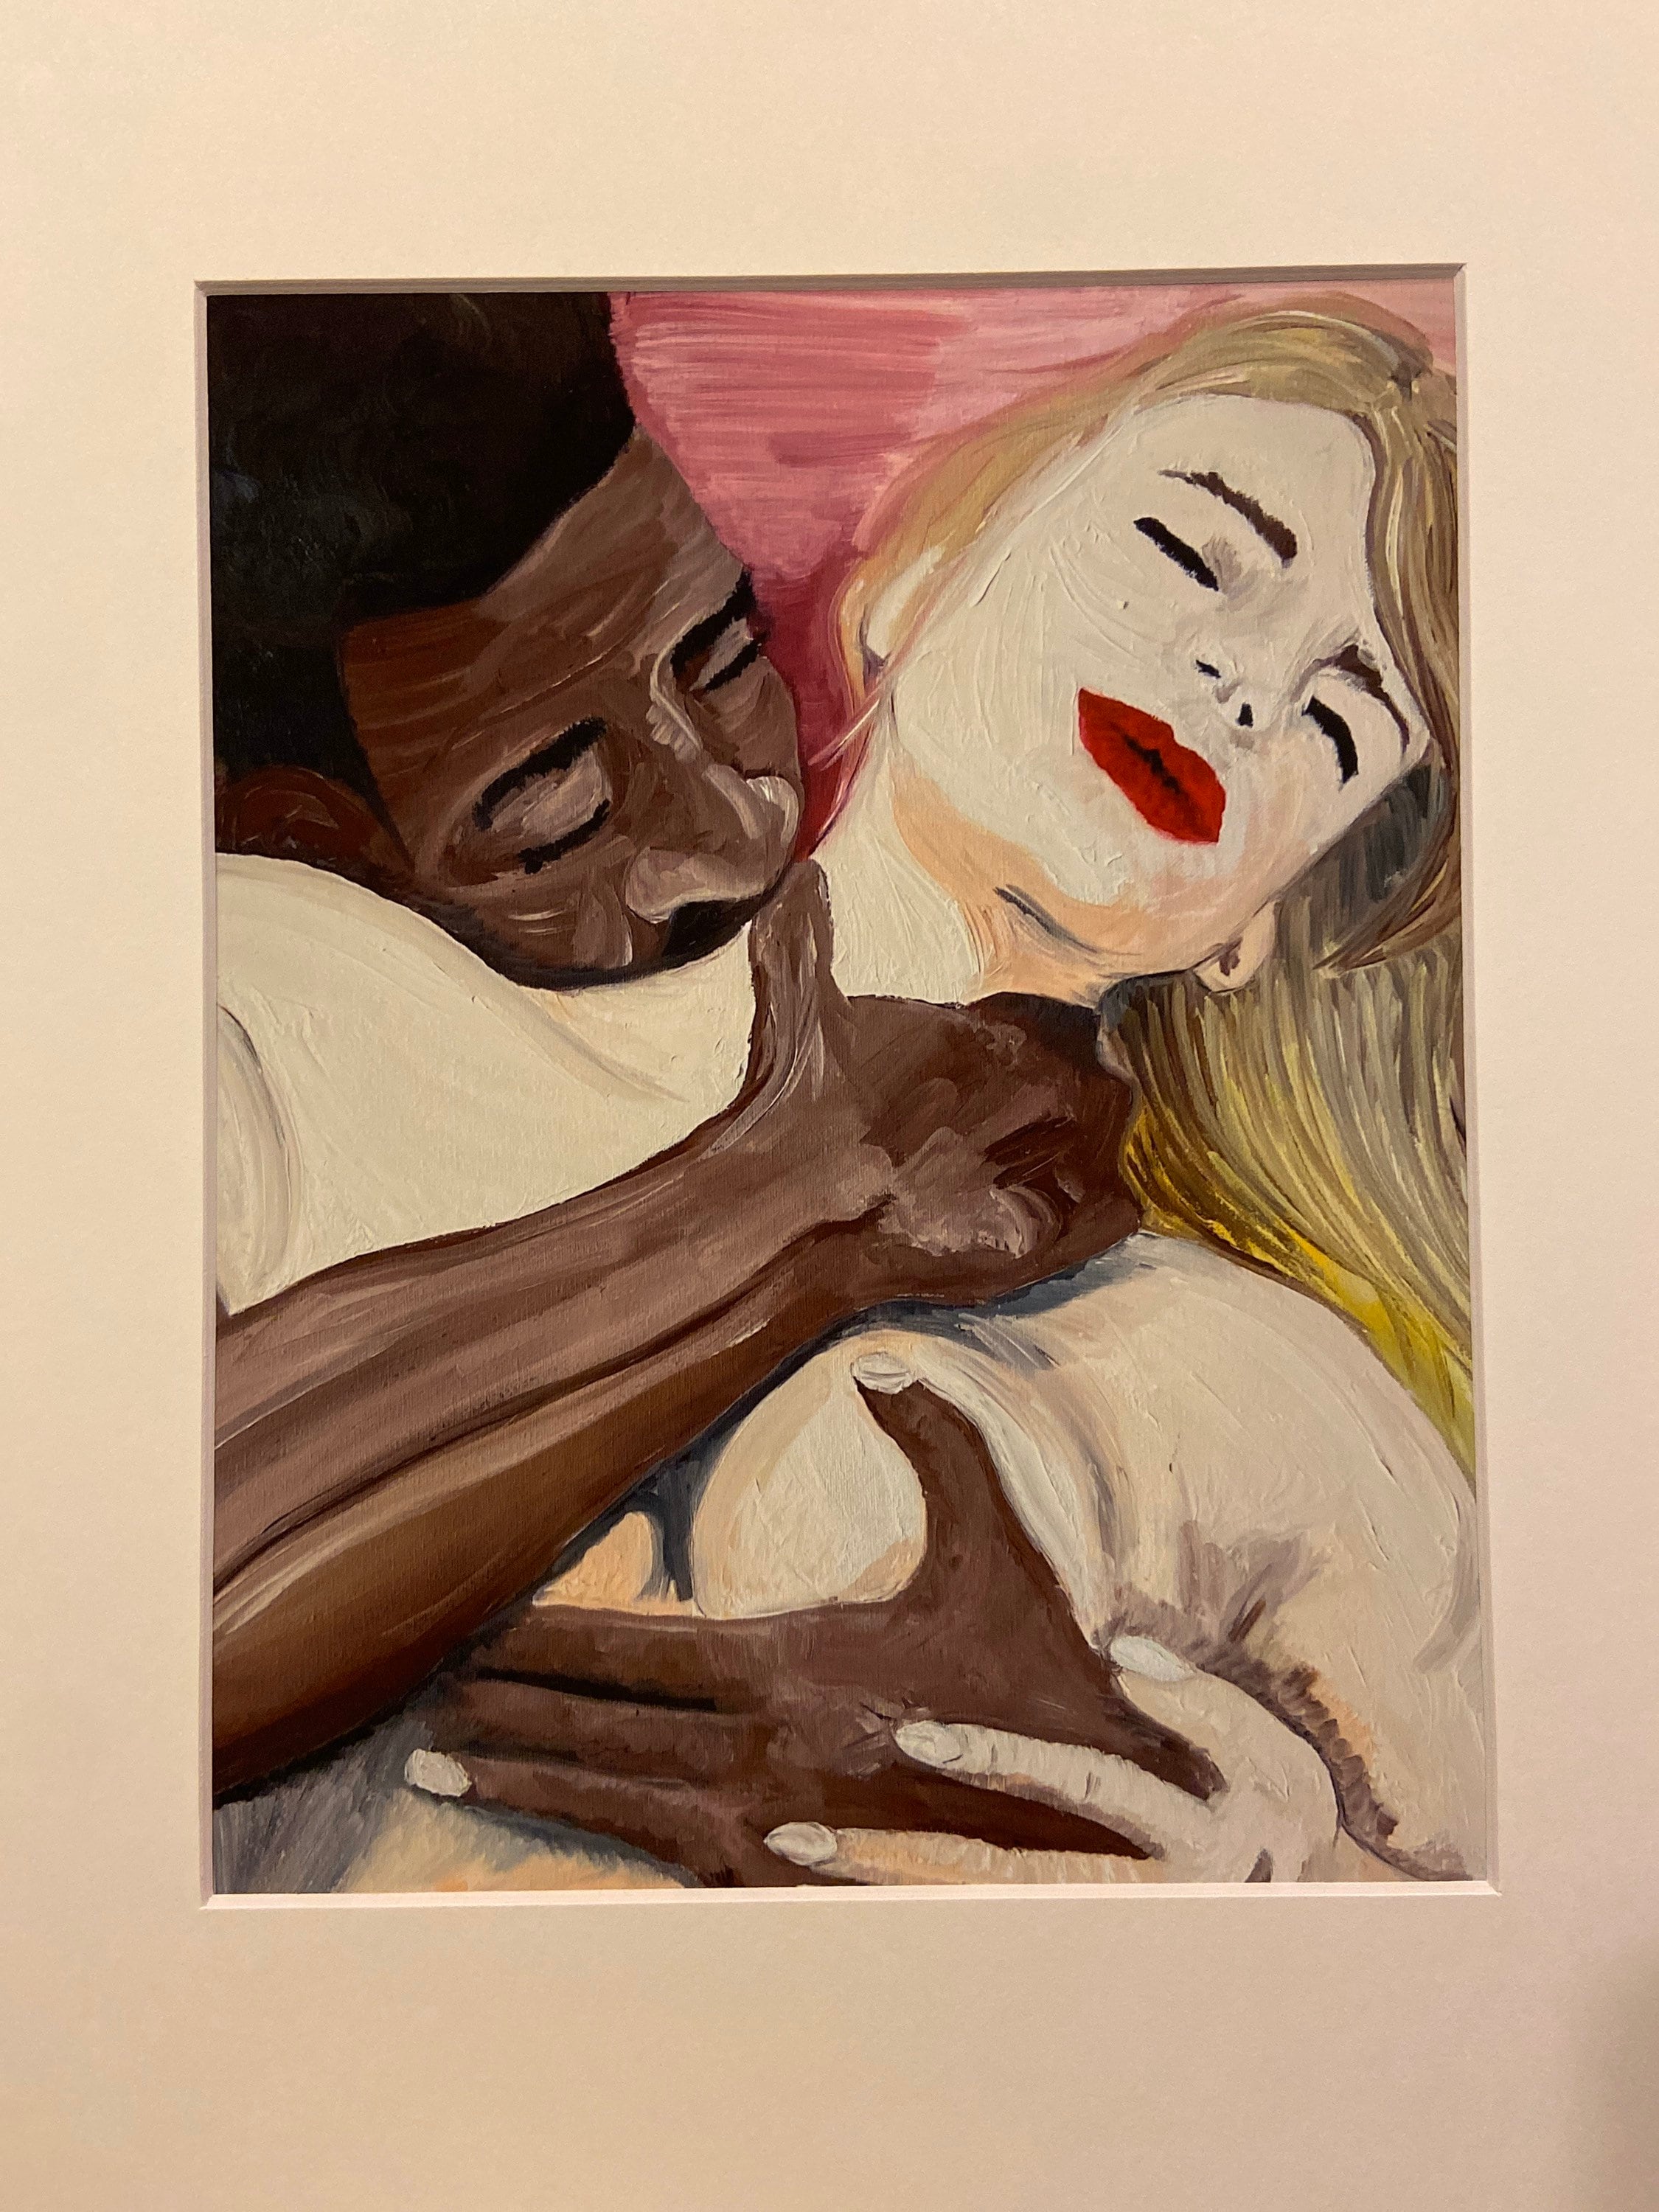 Artist Print Black and White Interracial Art Erotic photo pic